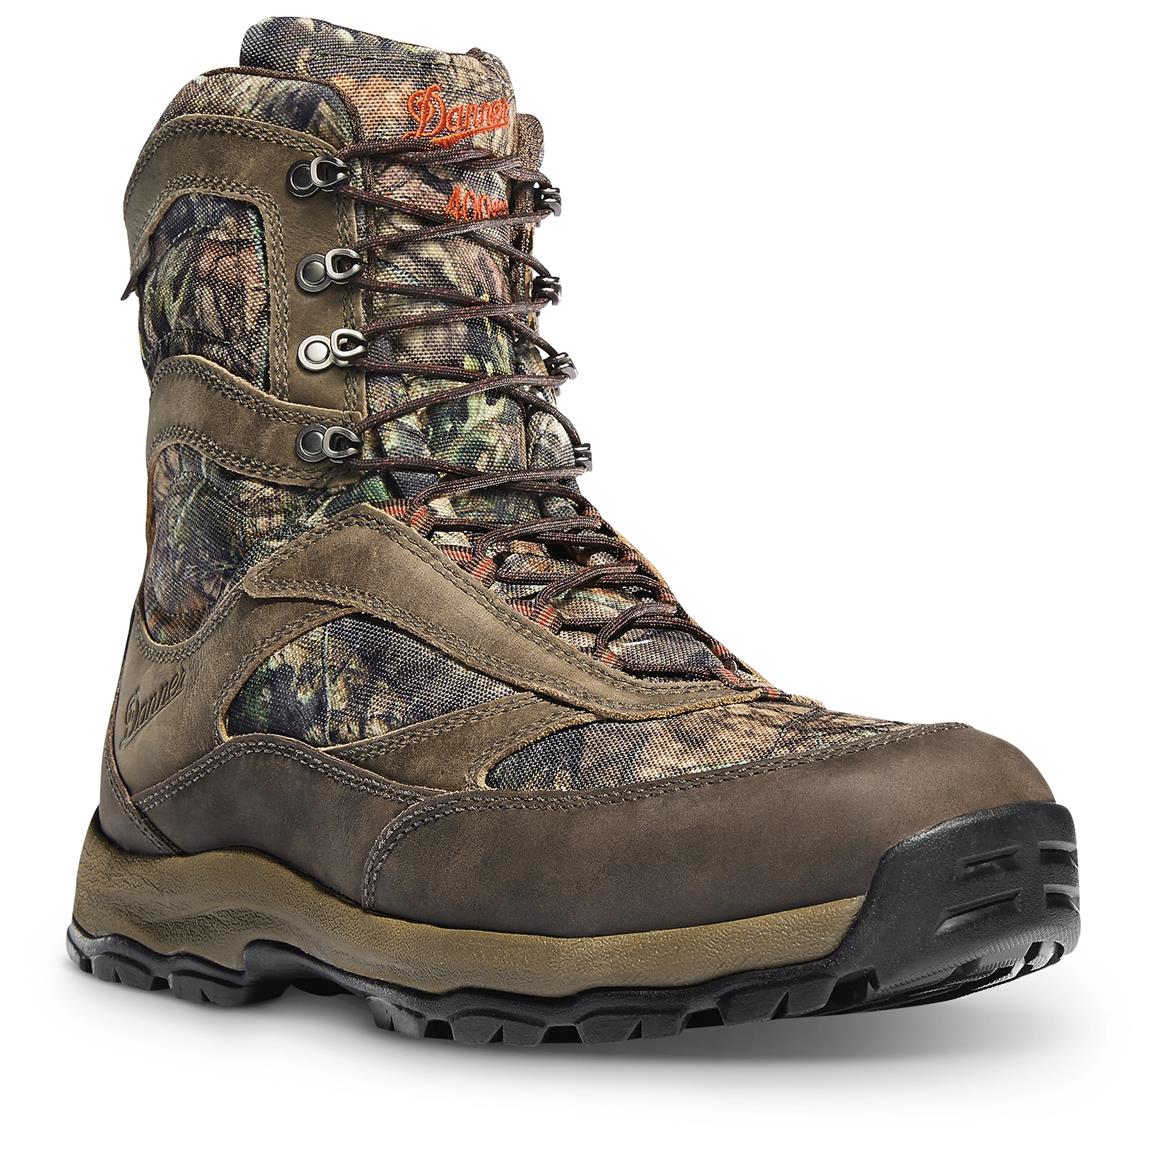 Danner Men's High Ground Waterproof Hunting Boots, 400 Gram Thinsulate